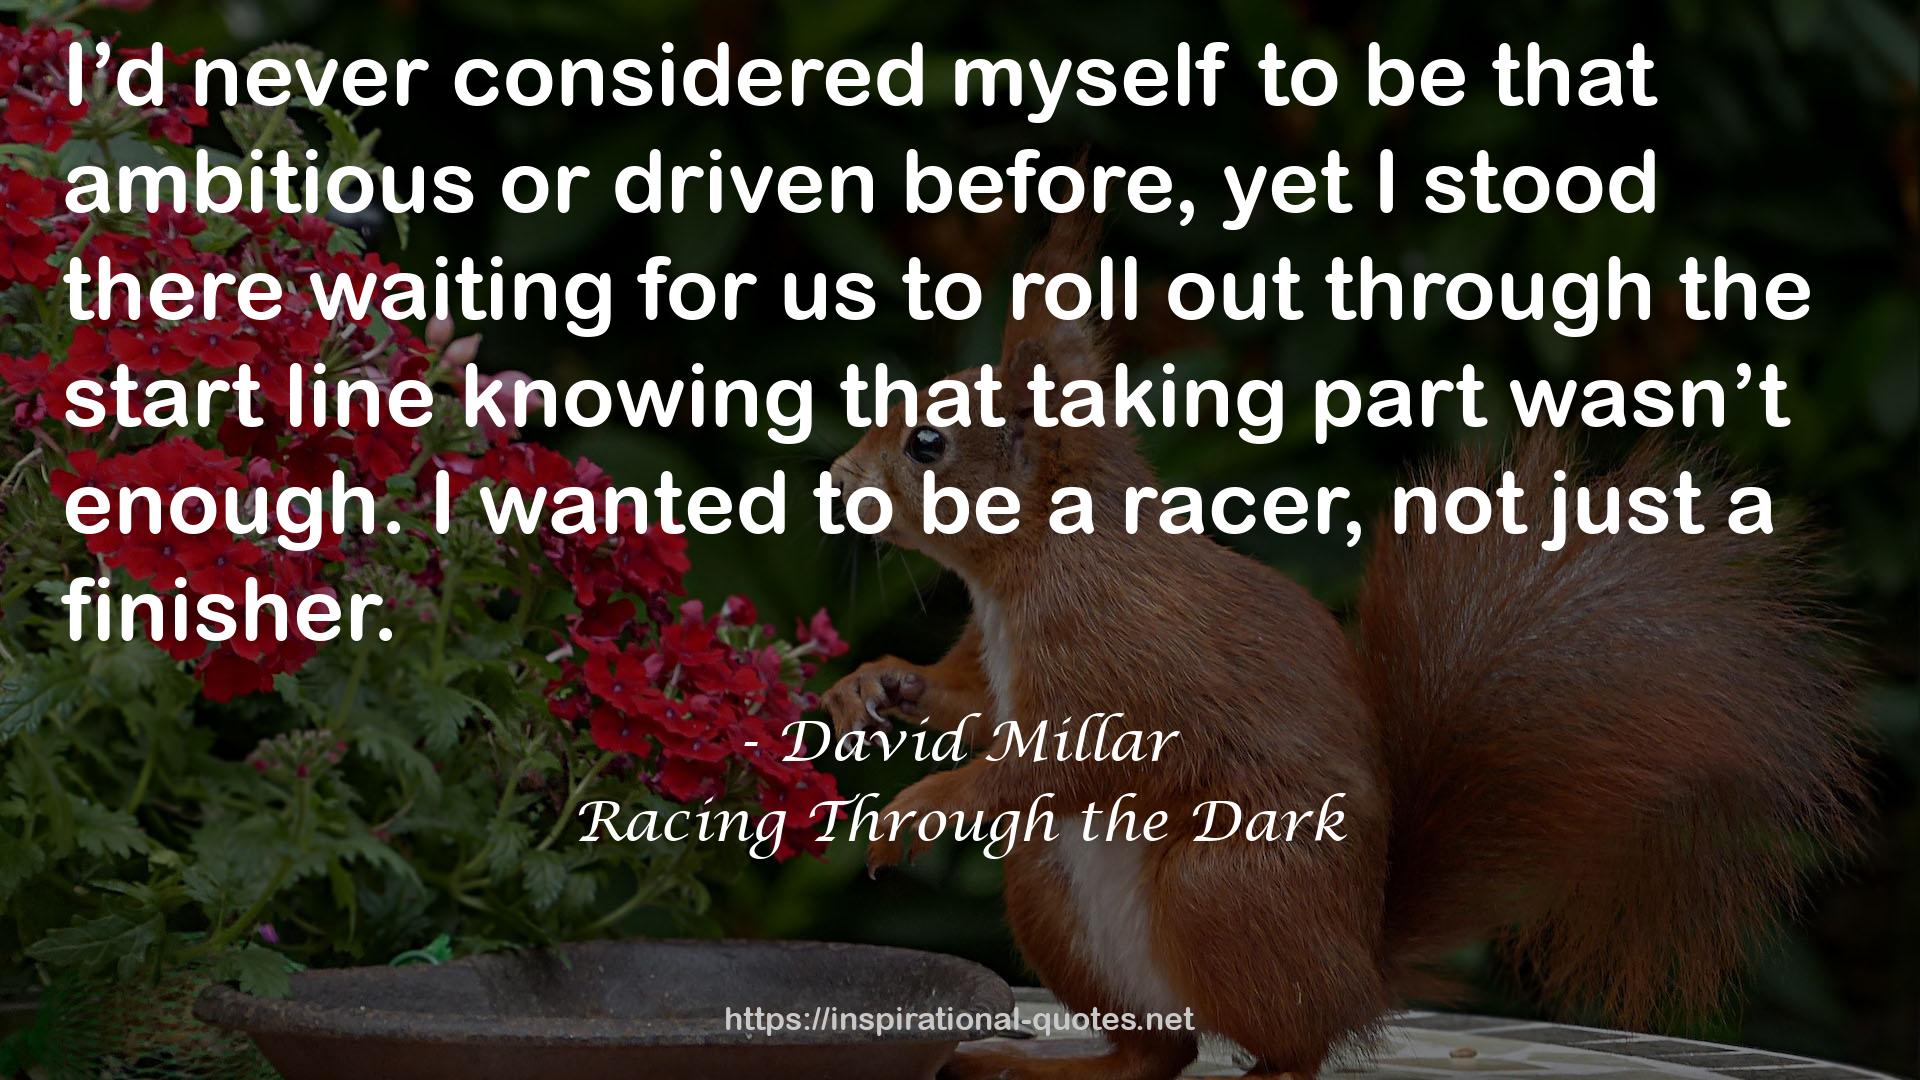 Racing Through the Dark QUOTES